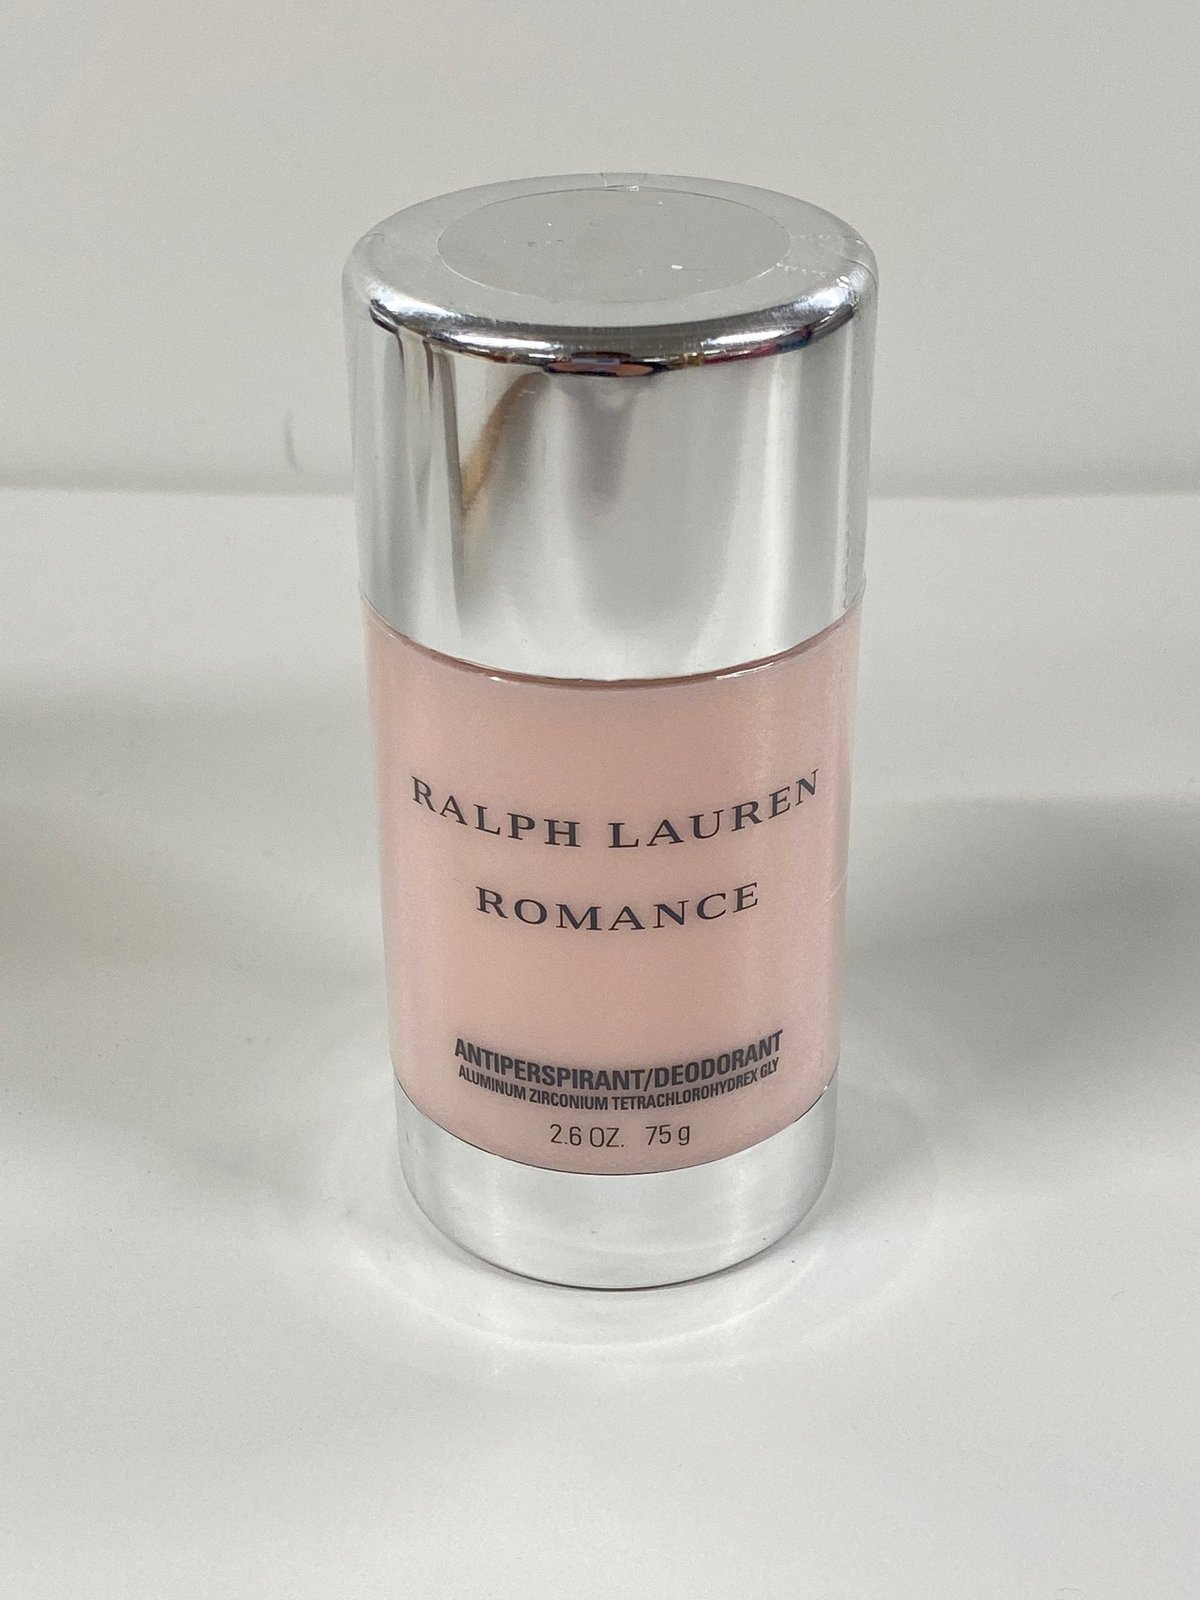 ROMANCE by RALPH LAUREN Antiperspirant/ Deodorant Stick 2.6oz/ 75ml ...